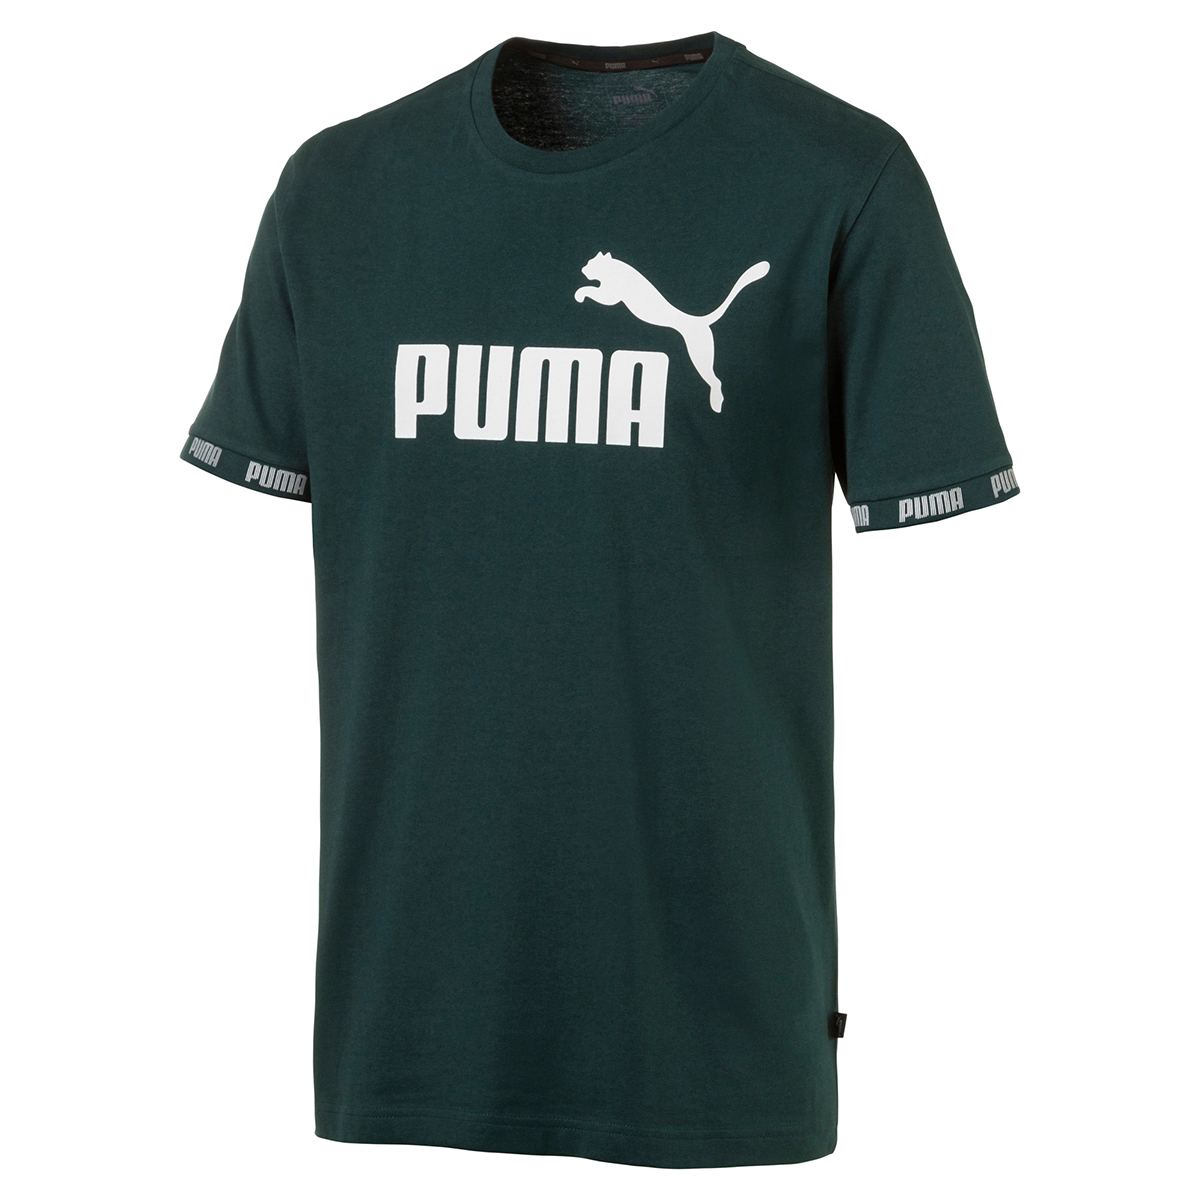 PUMA Herren Amplified Big Logo Tee T-Shirt grün 854242 30